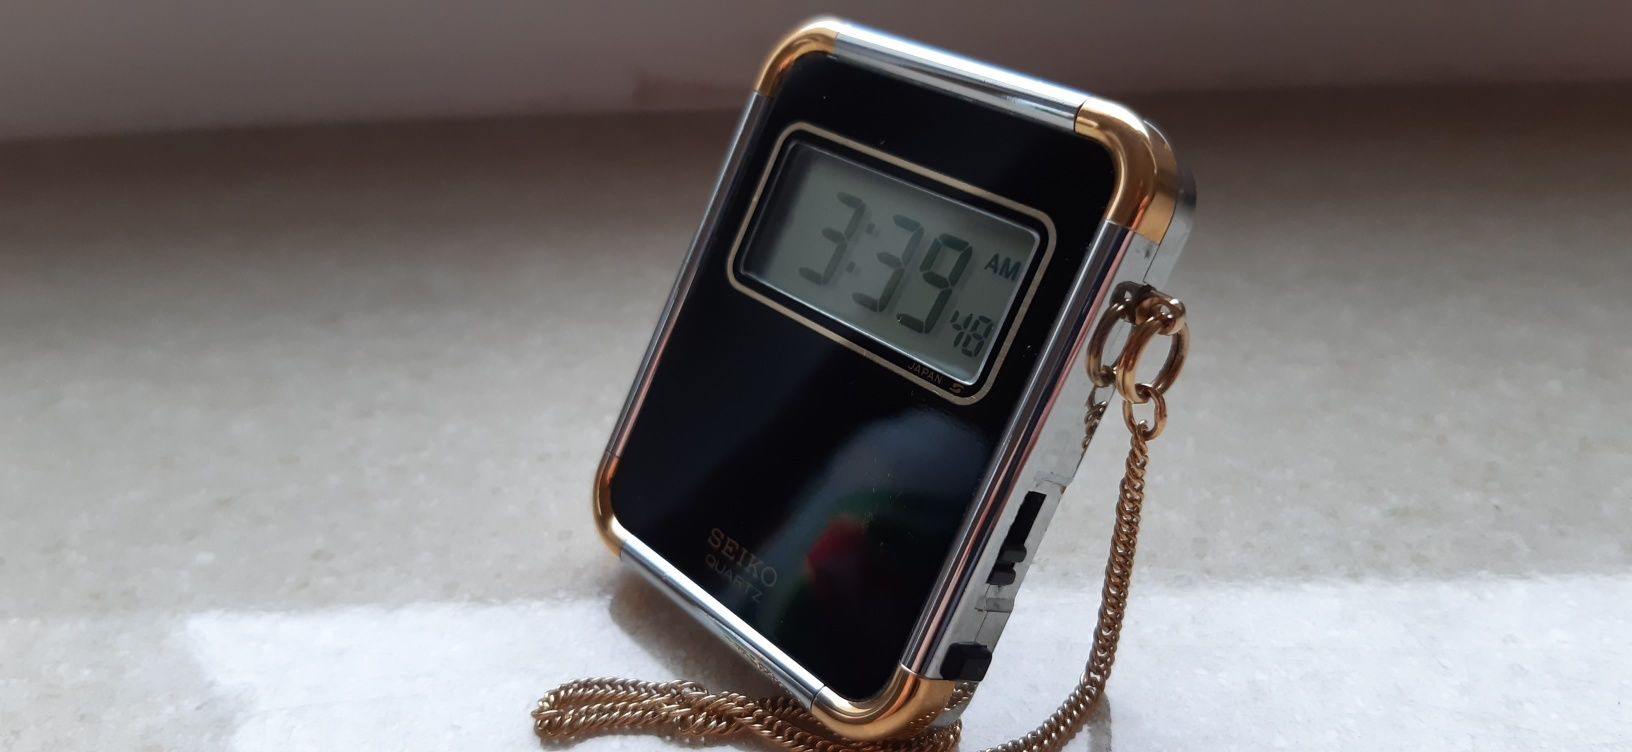 Seiko lcd vintage japan zegarek   budzik  jak Citizen casio